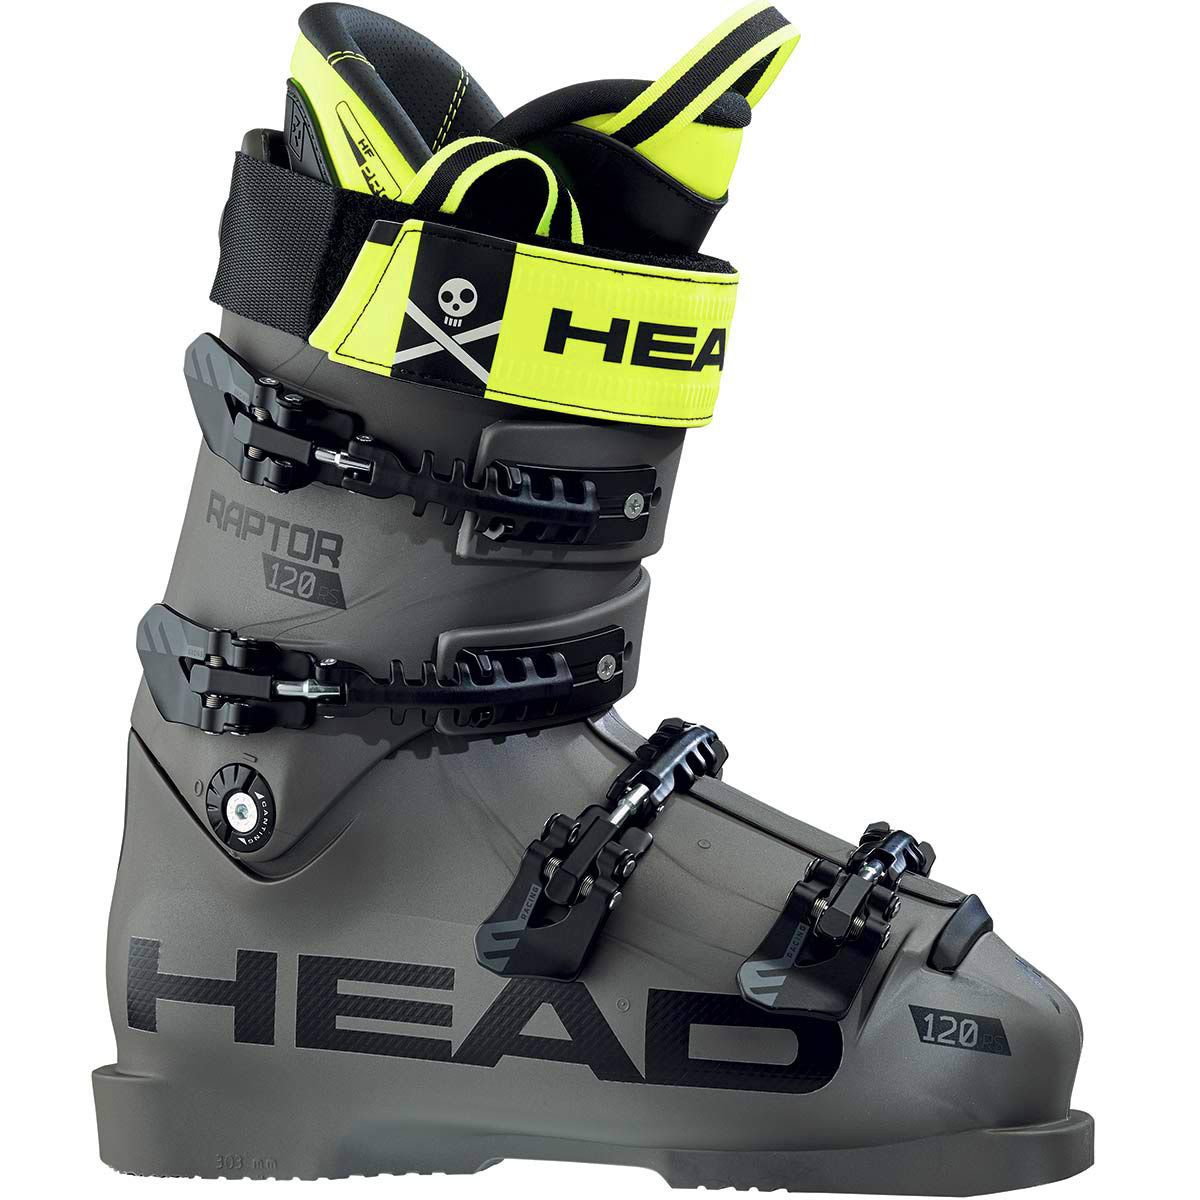 Chaussures de ski Raptor 120 S Rs Anthracite 2020